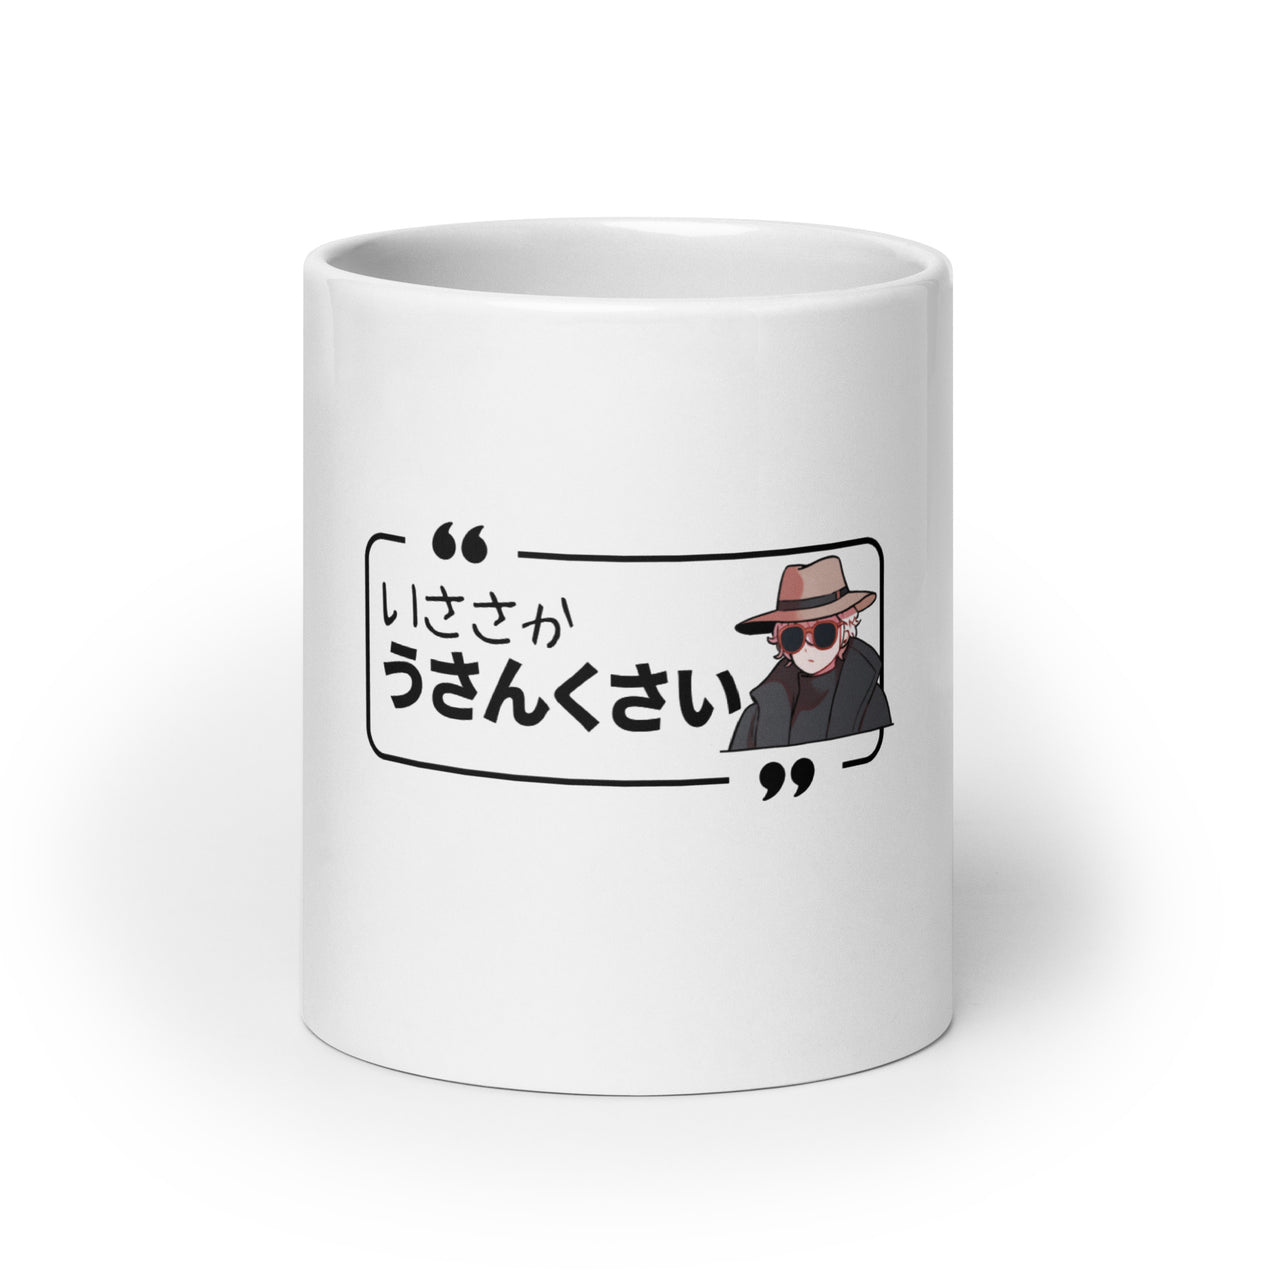 A little Suspicious in Japanese Mug